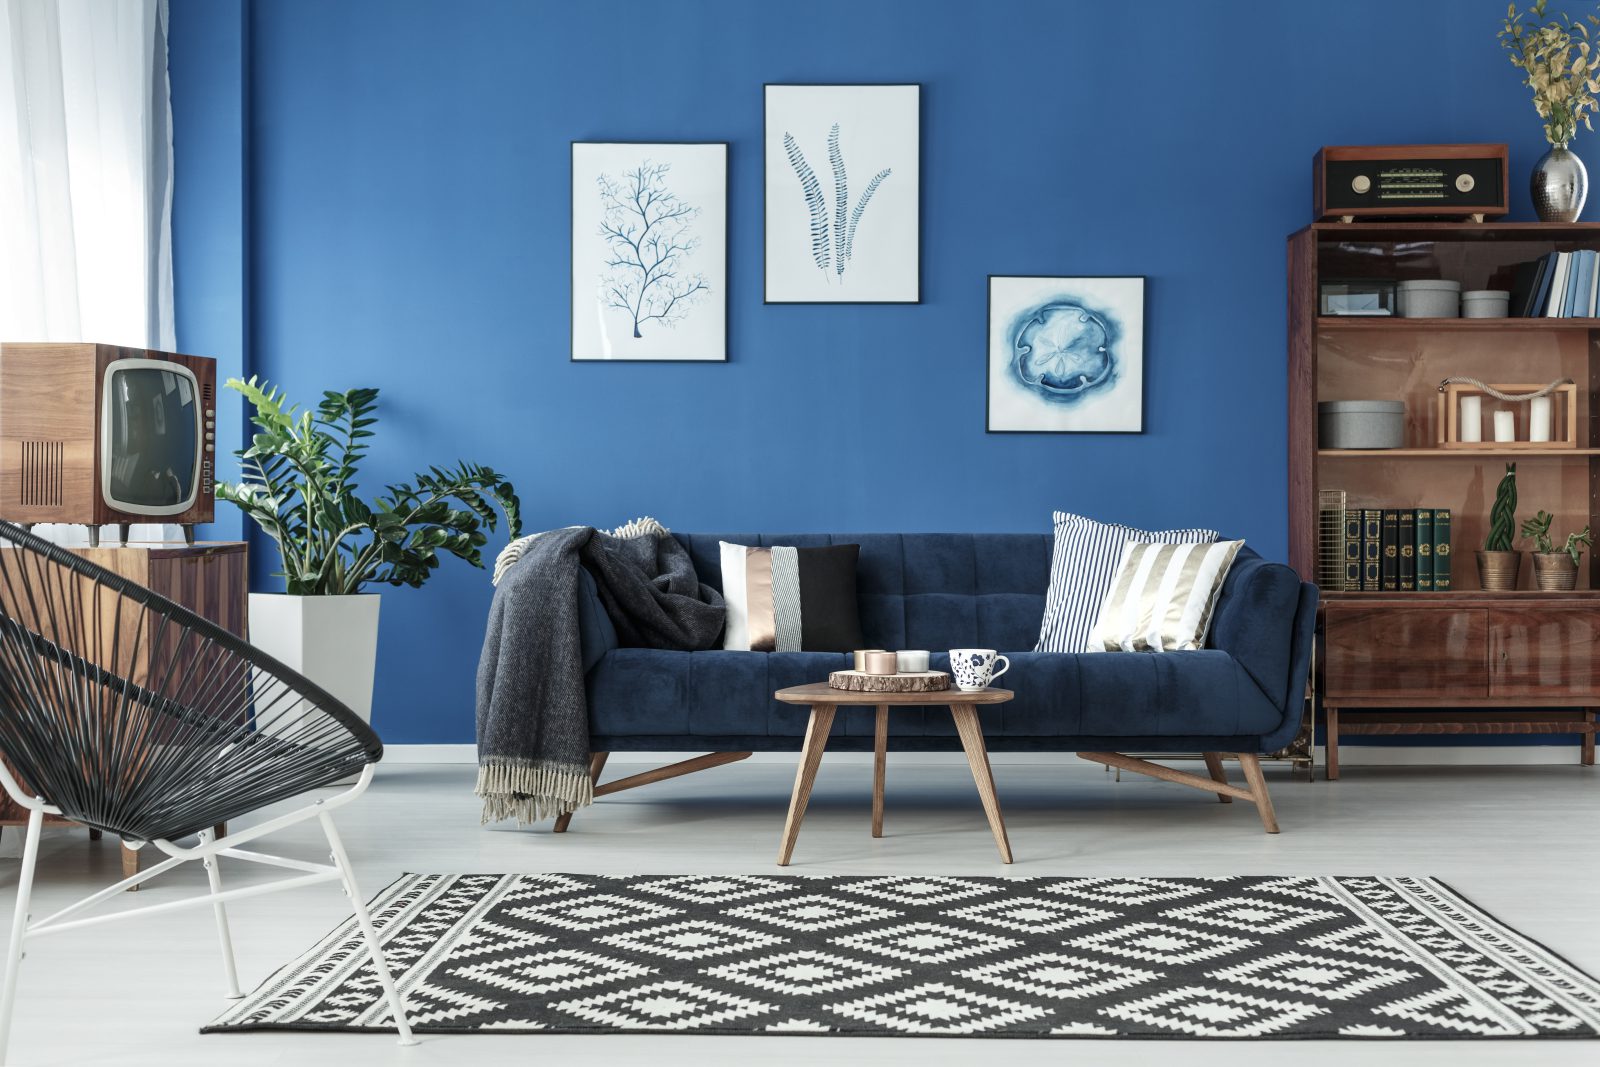 meble vintage, niebieska ściana, granatowa sofa